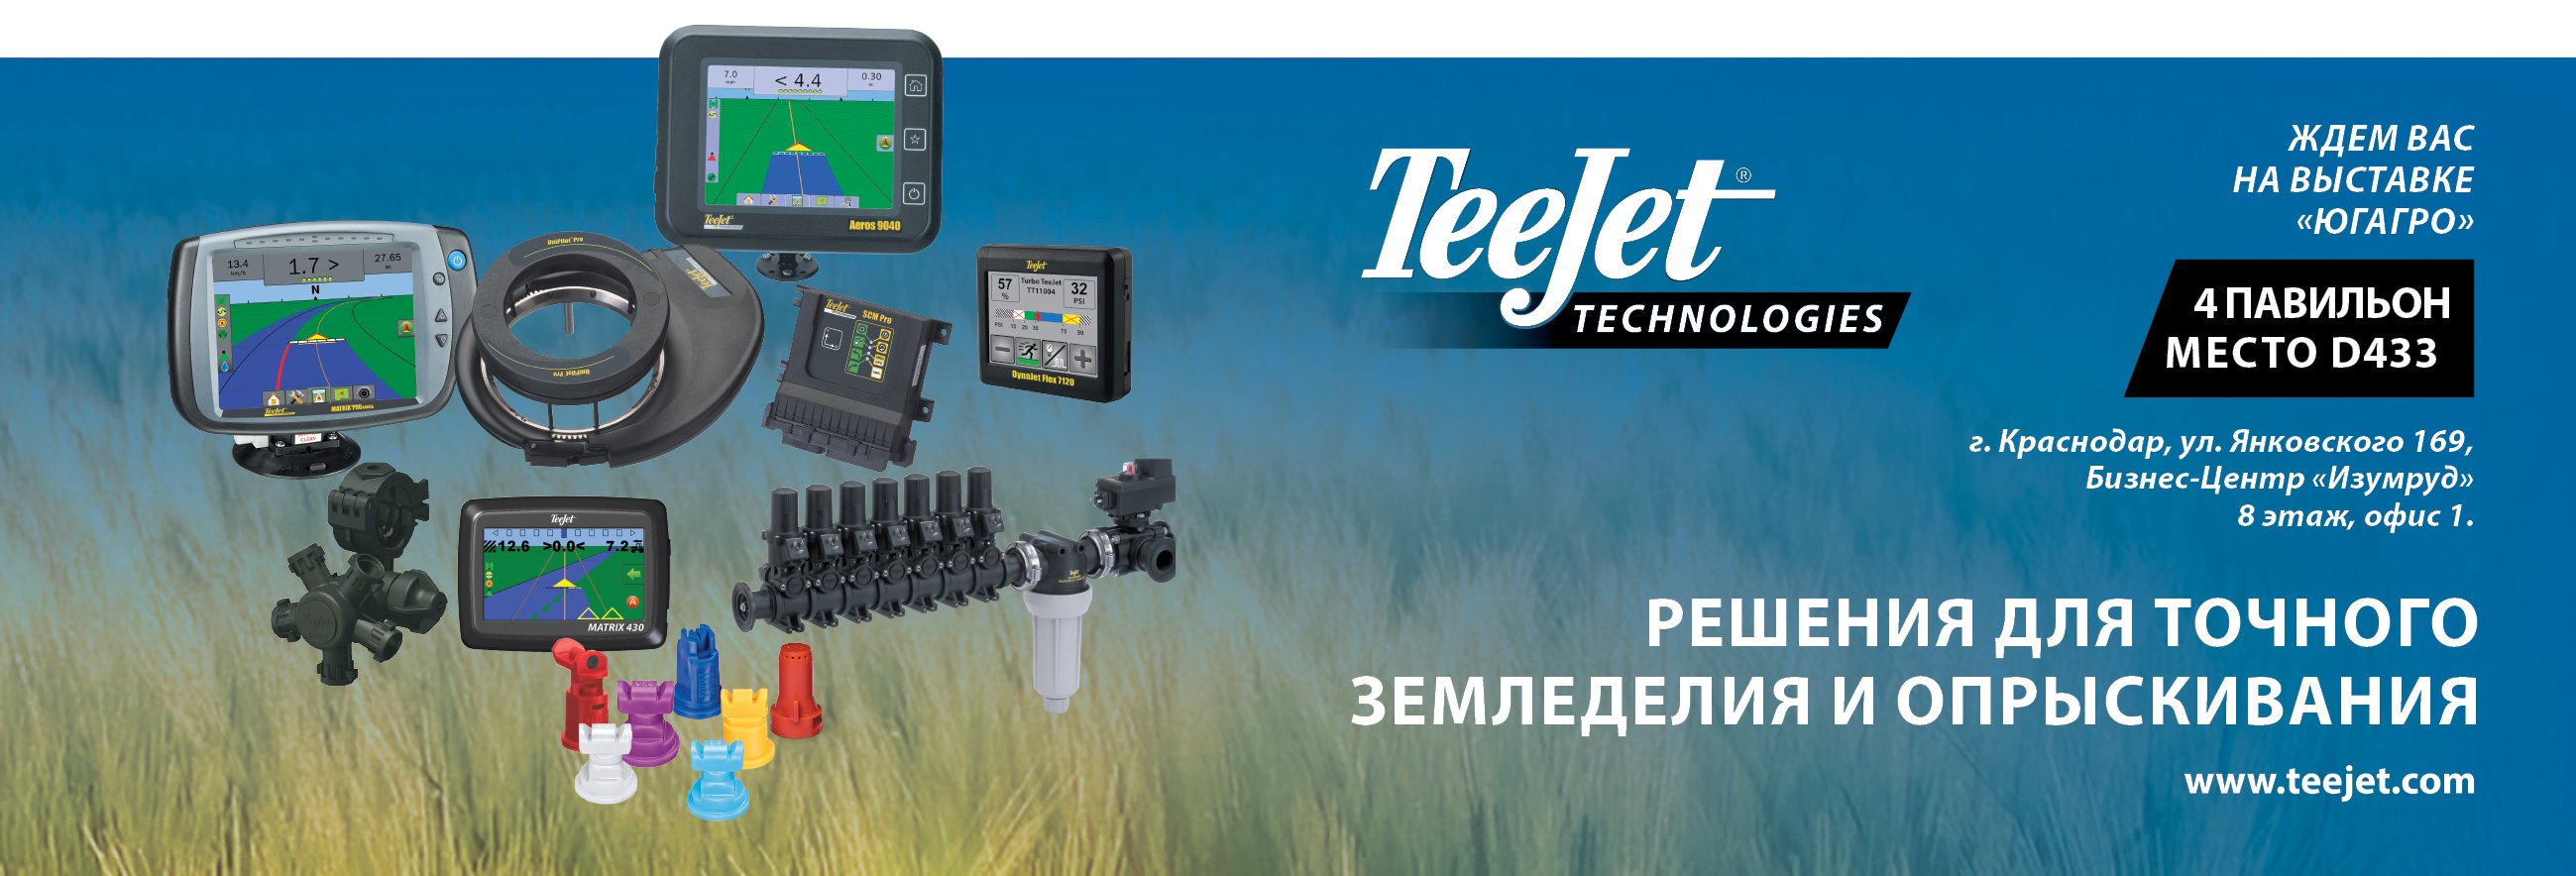 TeeJet Technologies стали ближе к кубанским аграриям